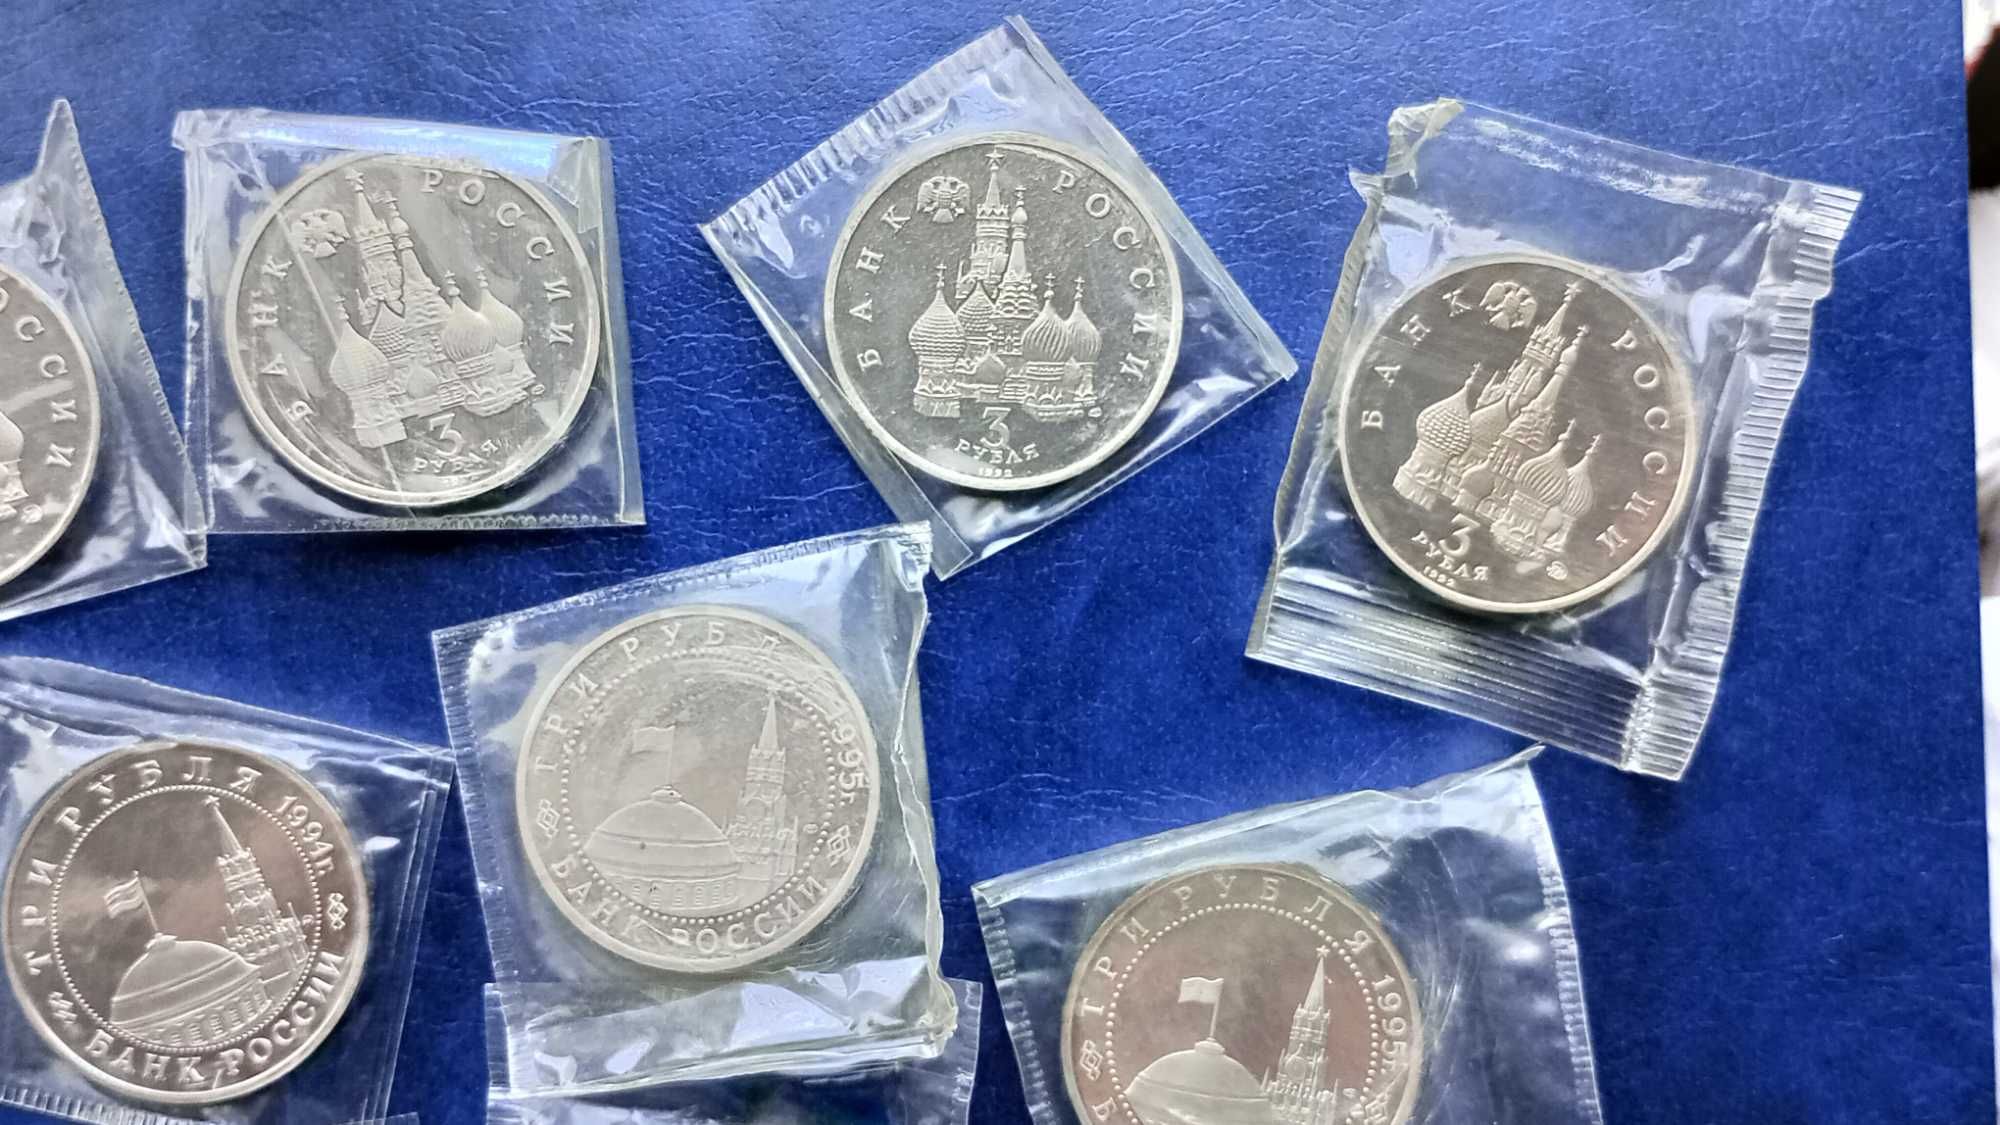 Stare monety  Zestaw 9 monet Stan menniczy 3 Ruble